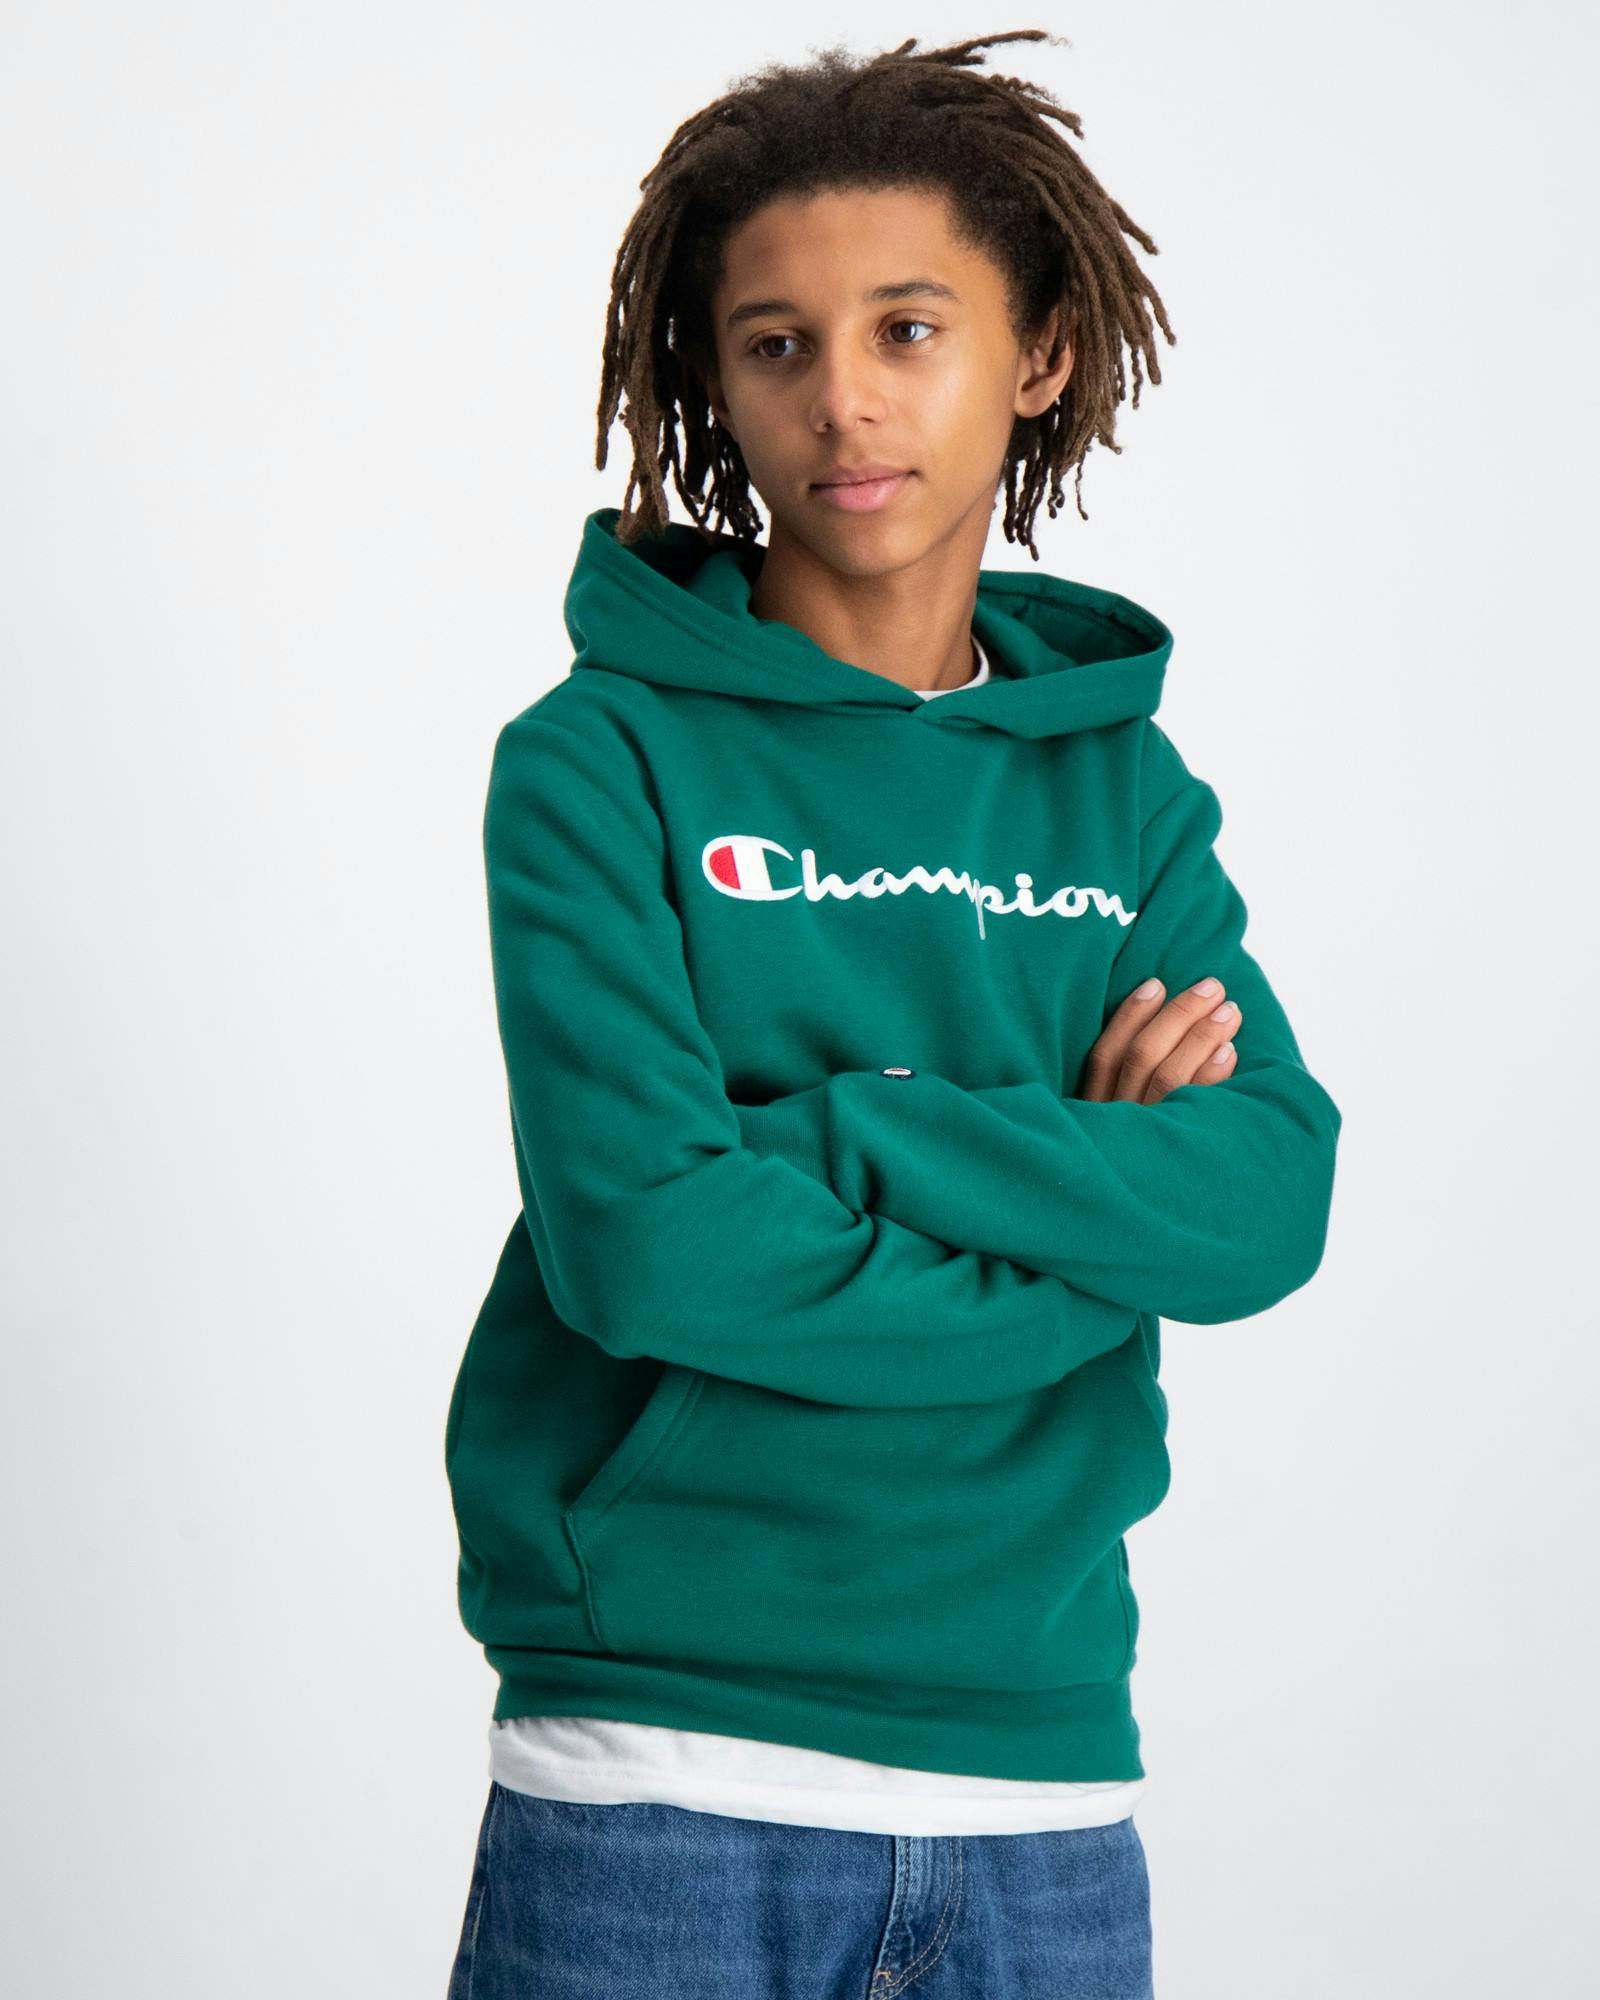 Grøn Hooded Sweatshirt til | Kids Brand